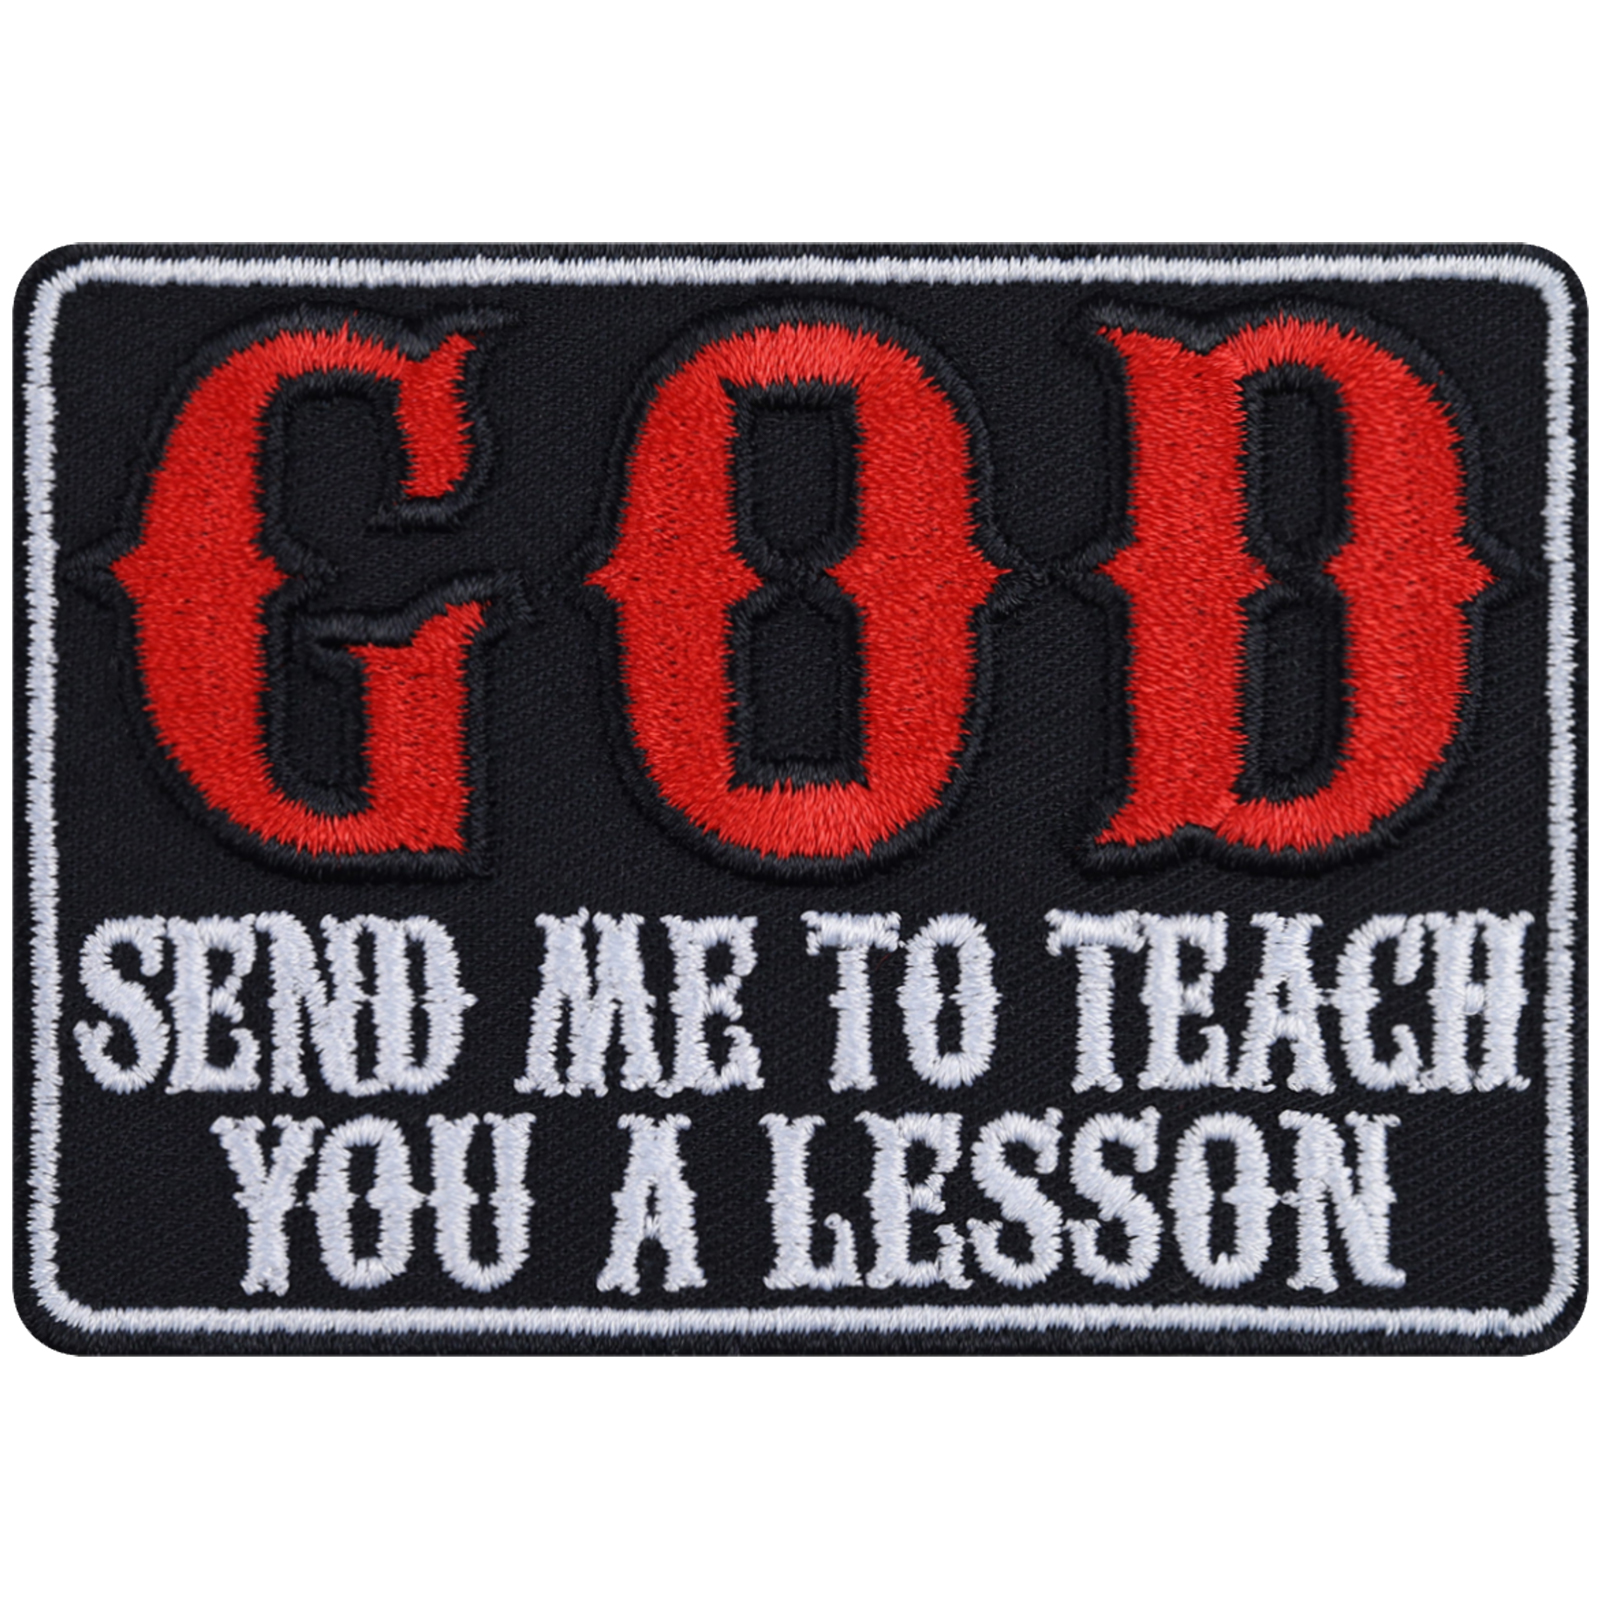 God send me to teach you a lesson - Patch